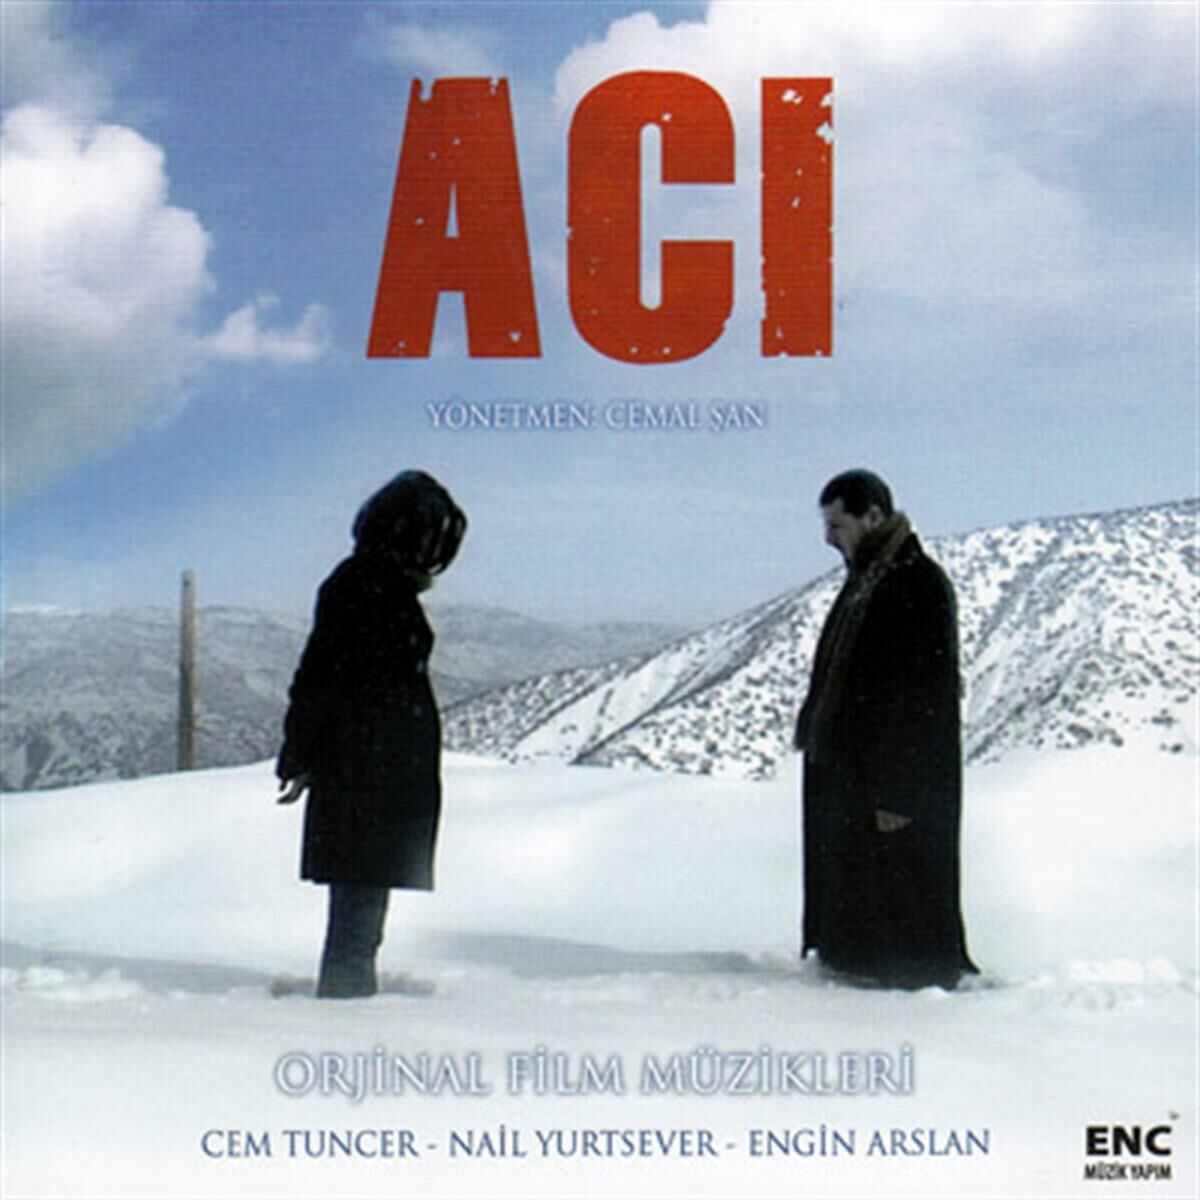 ACI - ORİJİNAL FİLM MÜZİKLERİ / SOUNDTRACK - CEM TUNCER, NAİL YURTSEVER, ENGİN ARSLAN (2009) - CD AMBALAJINDA SIFIR